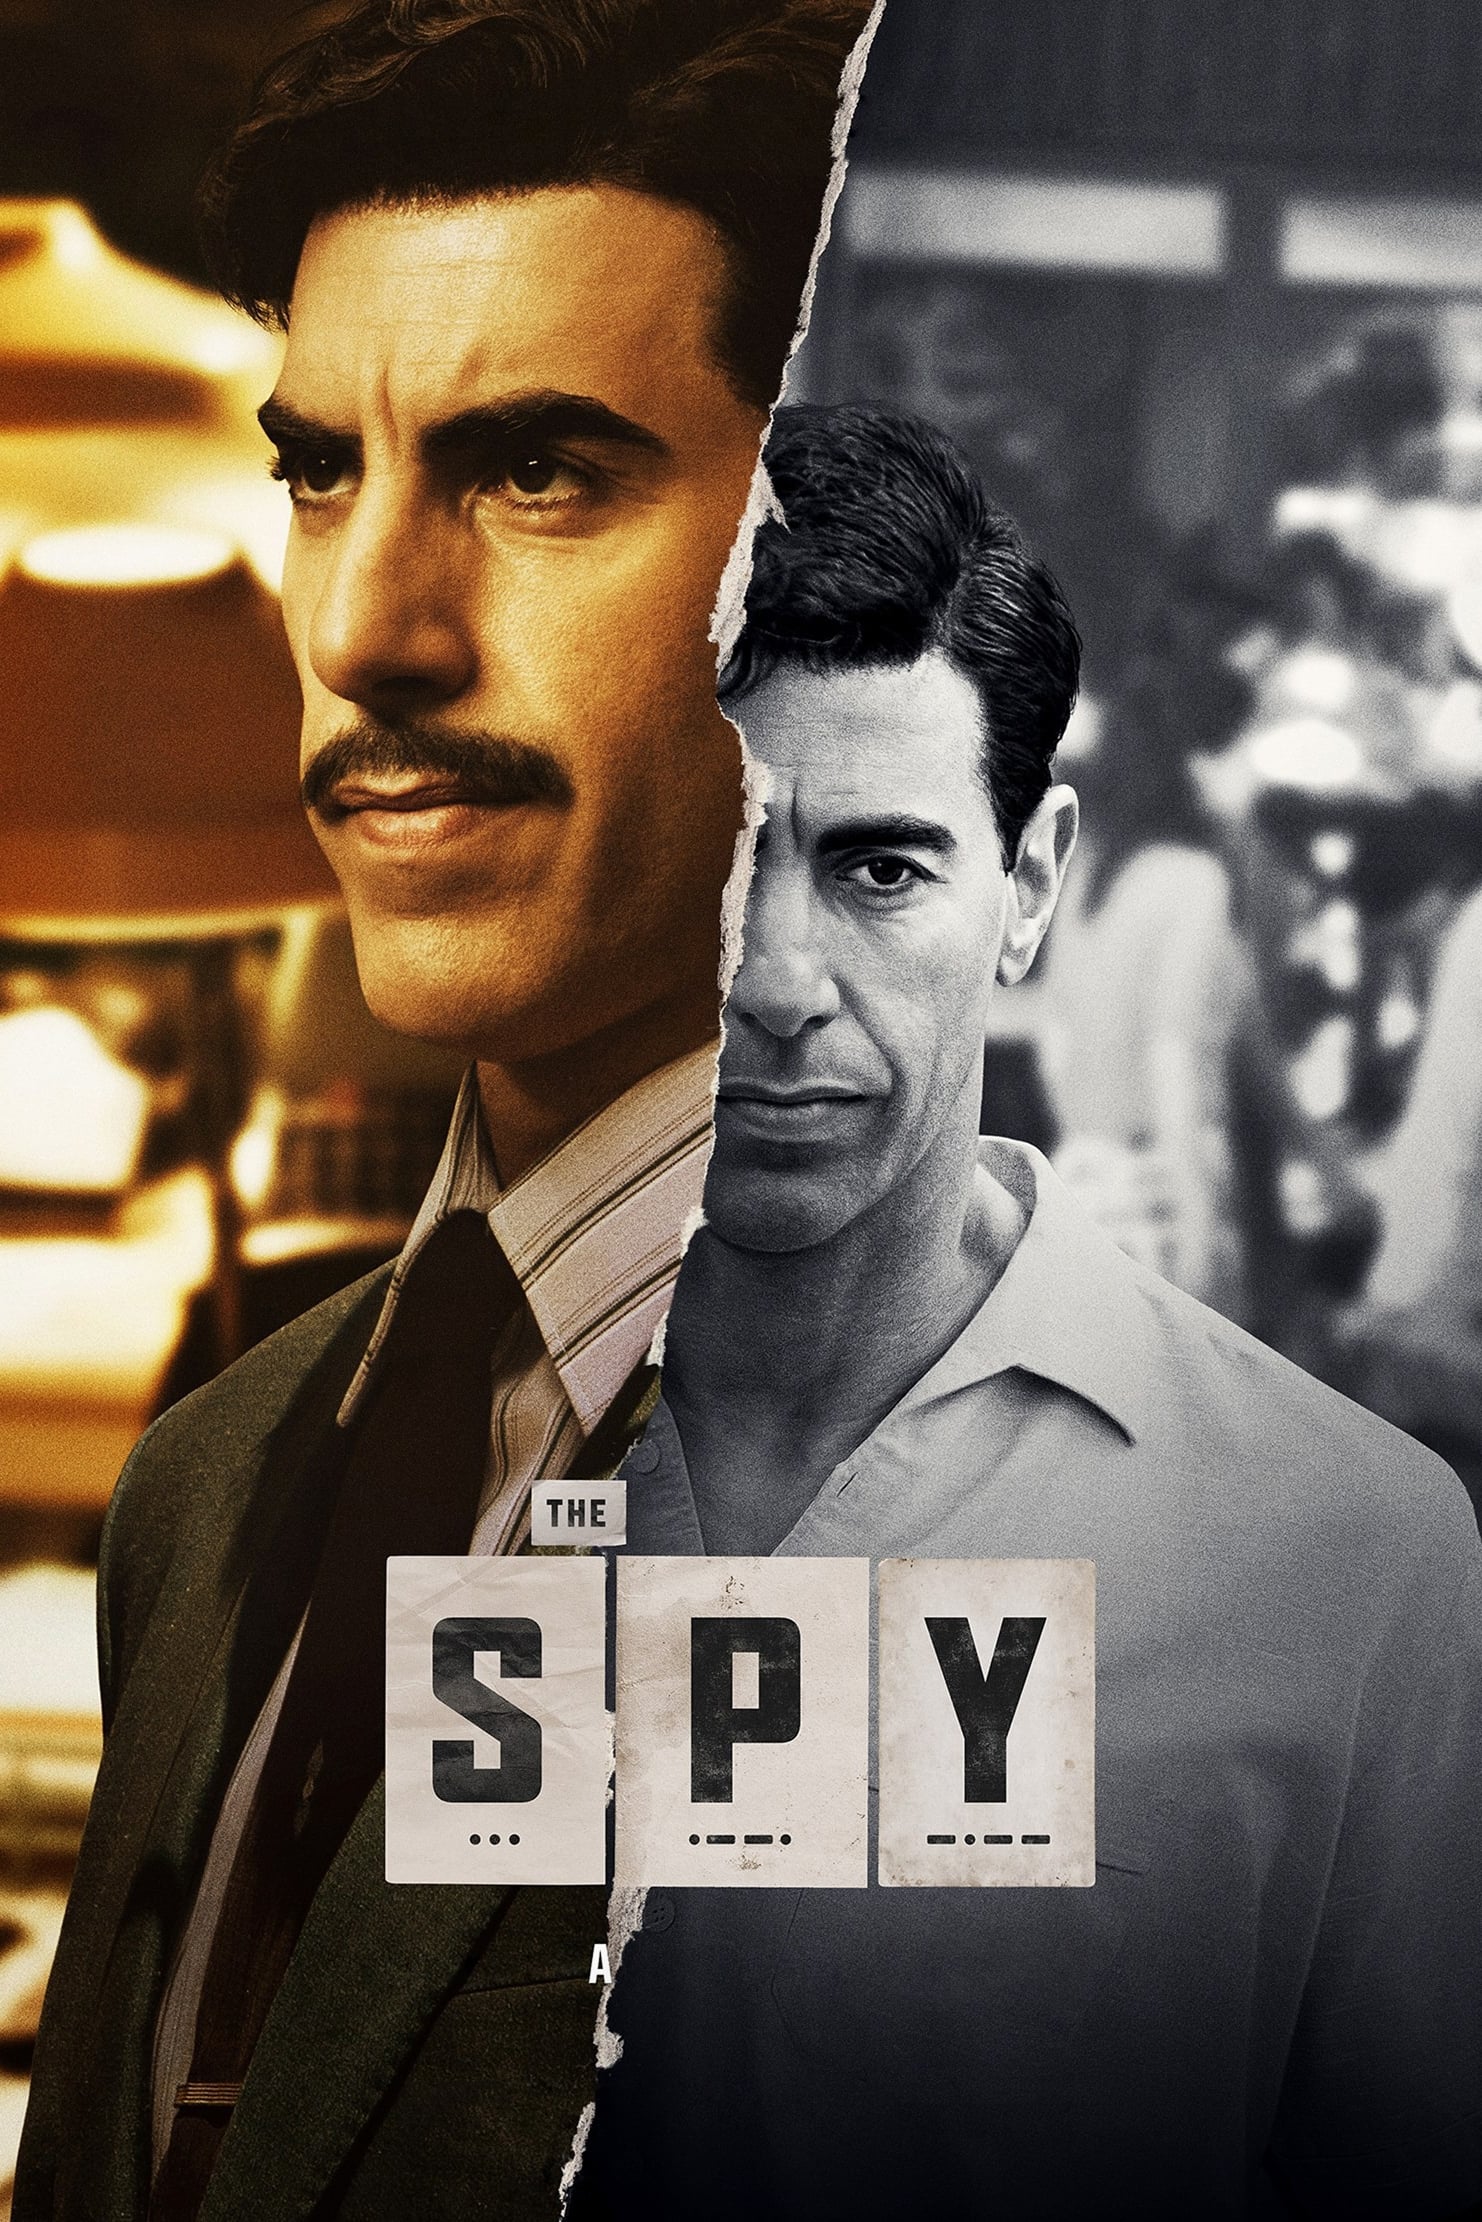 The Spy TV Shows About Spy